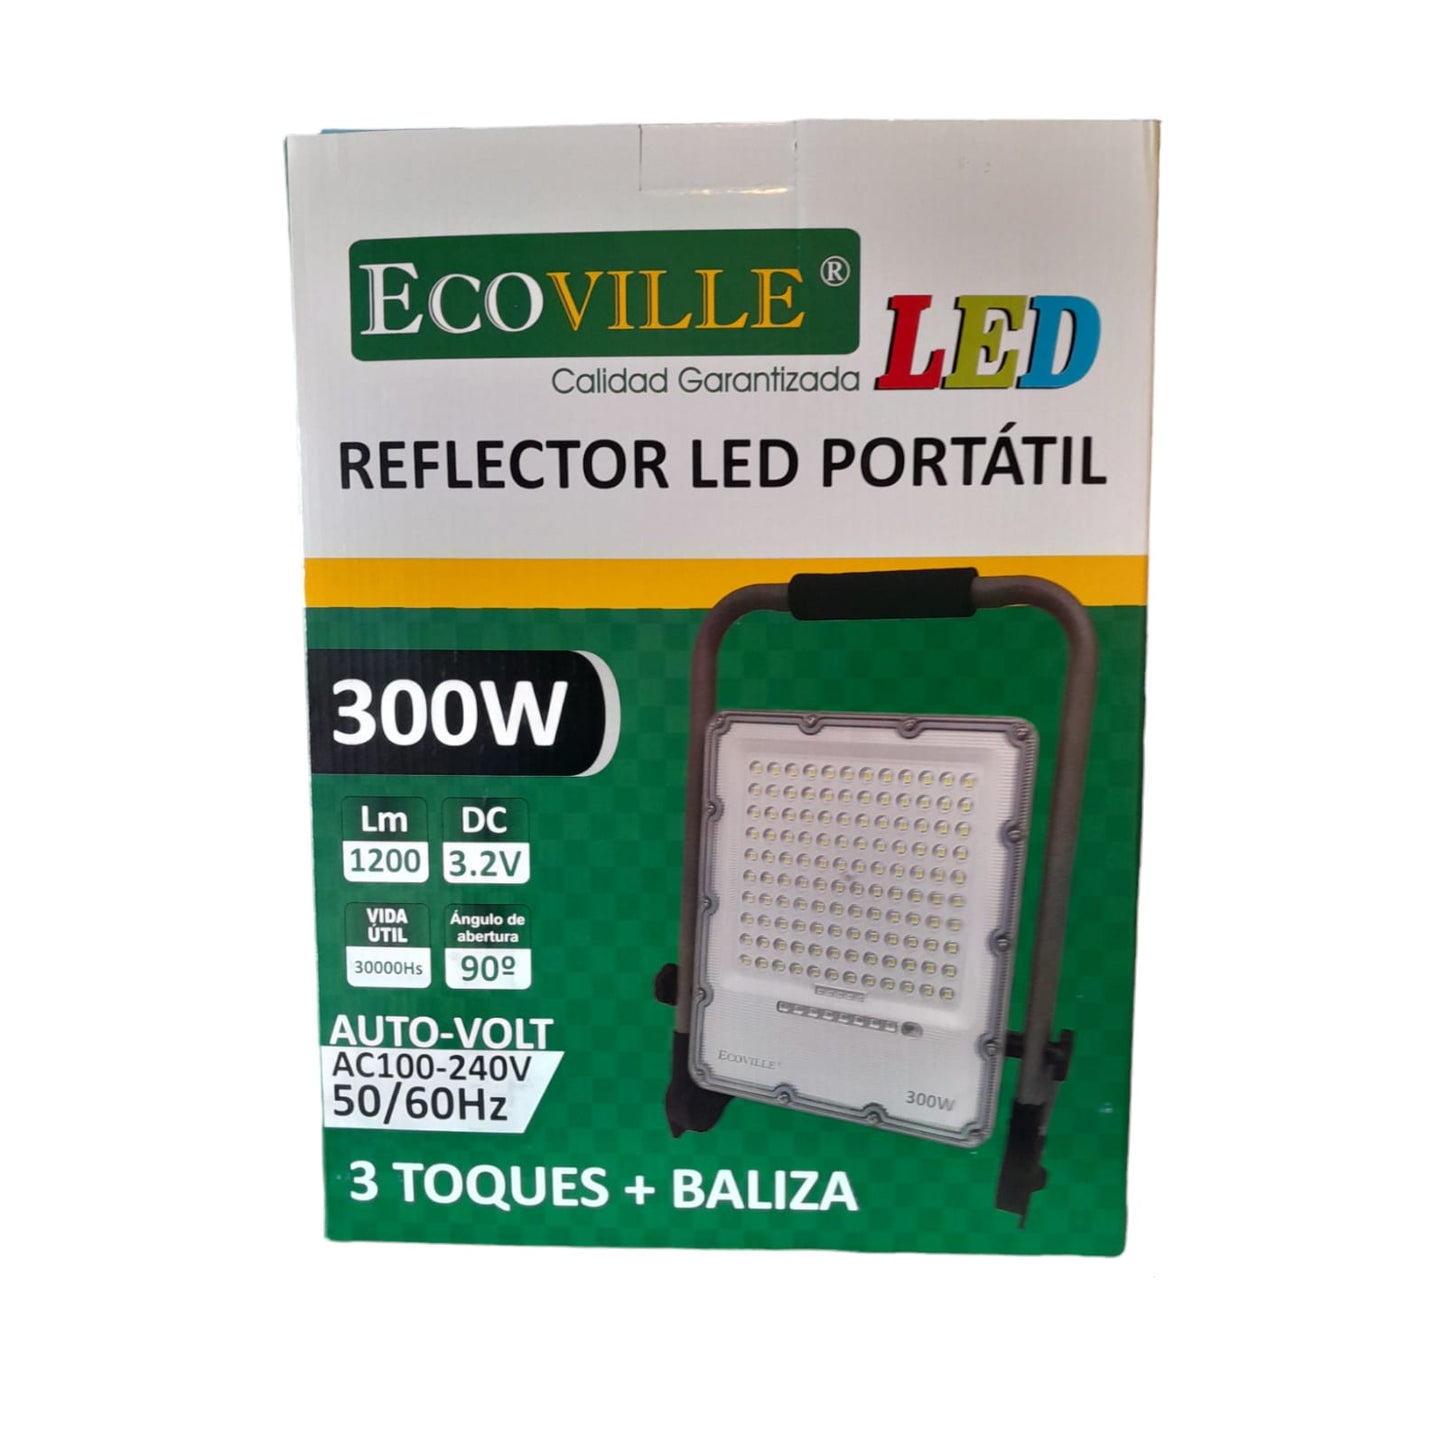 REFLECTOR LED PORTATIL 300W